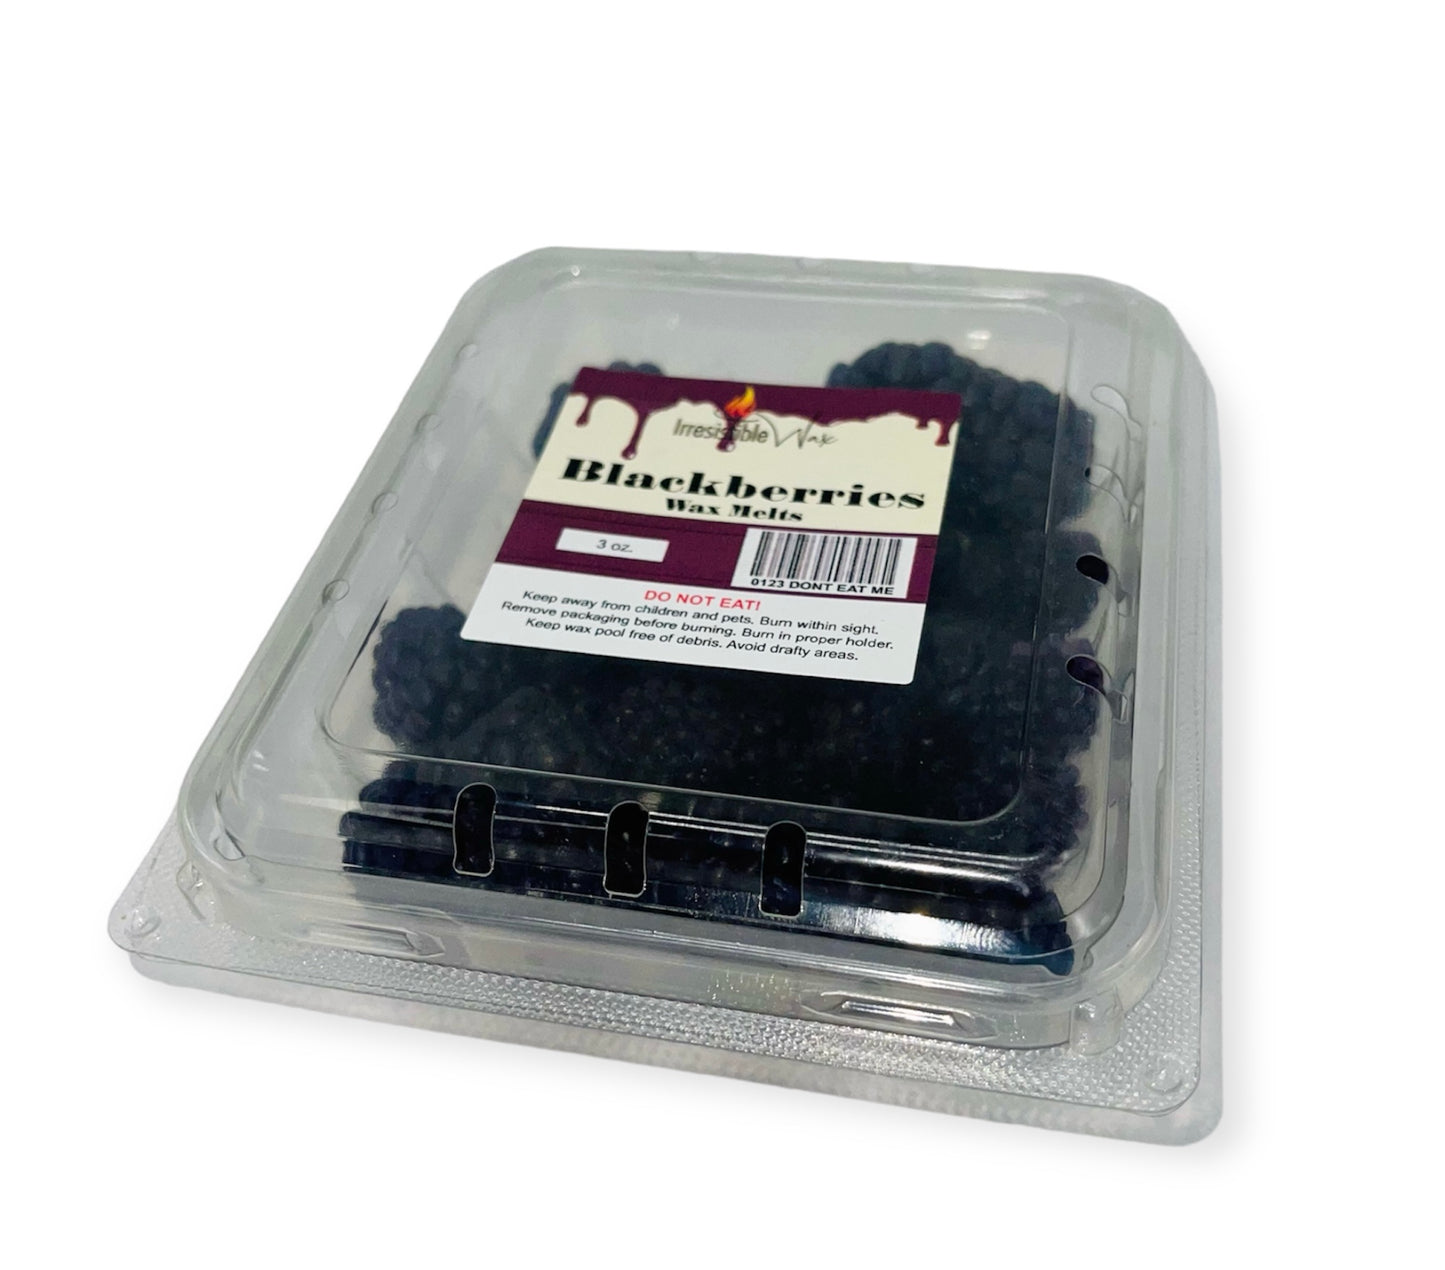 Blackberries Wax Melts